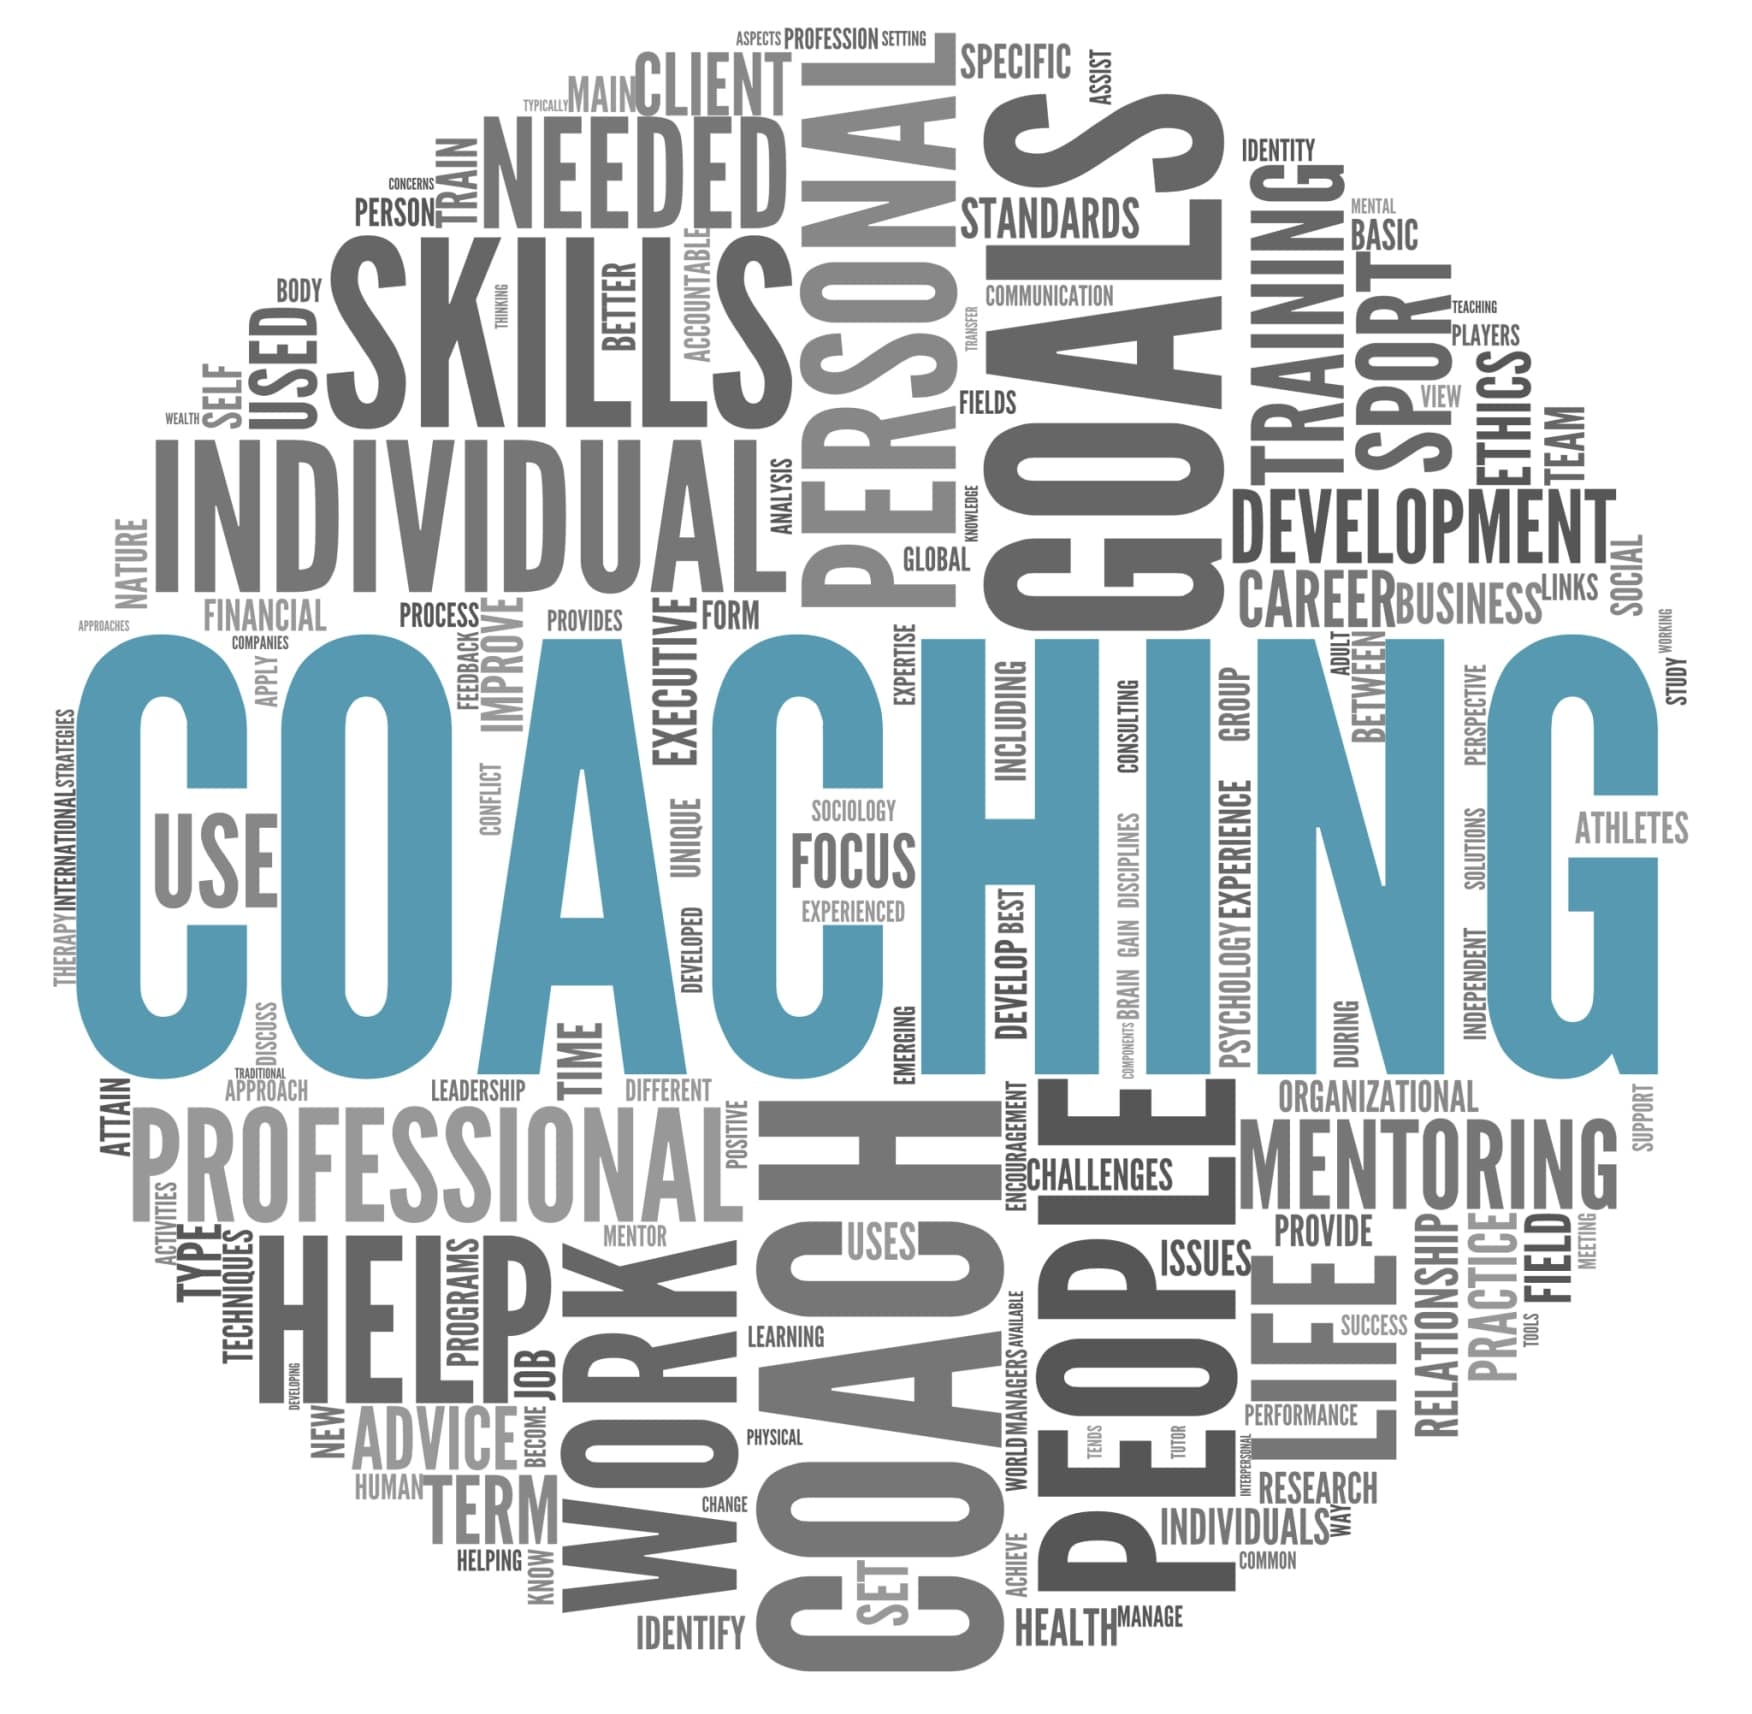 Lectura recomendada: Coaching for performance